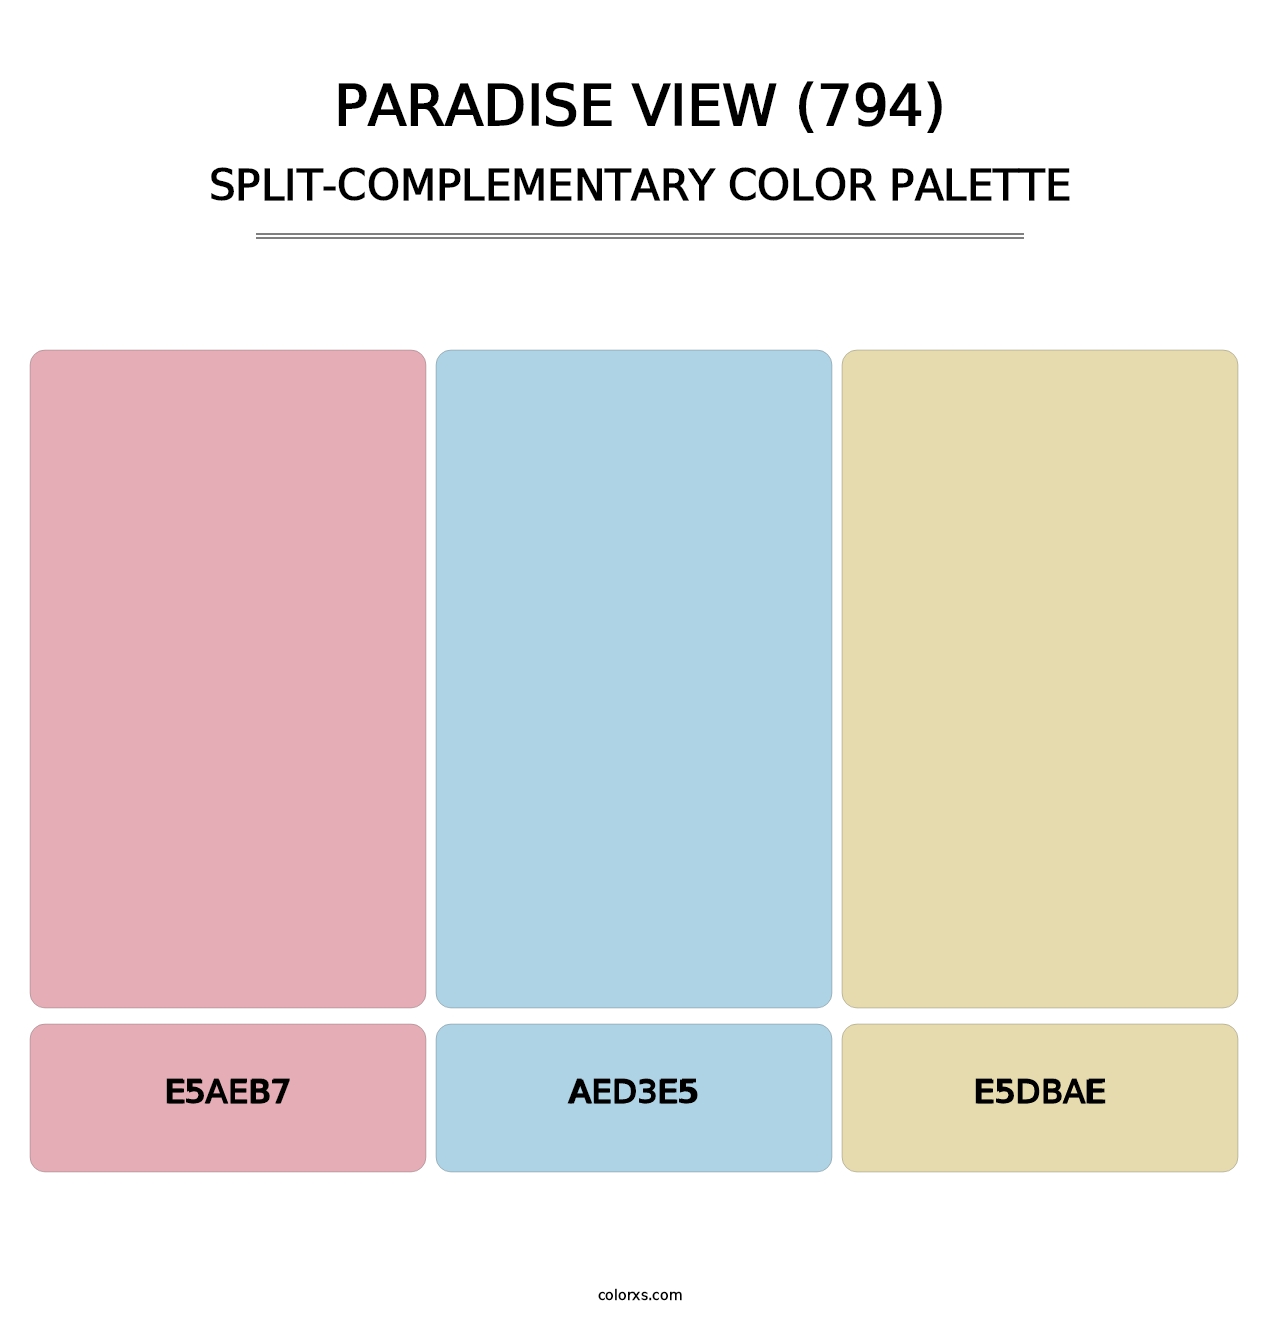 Paradise View (794) - Split-Complementary Color Palette